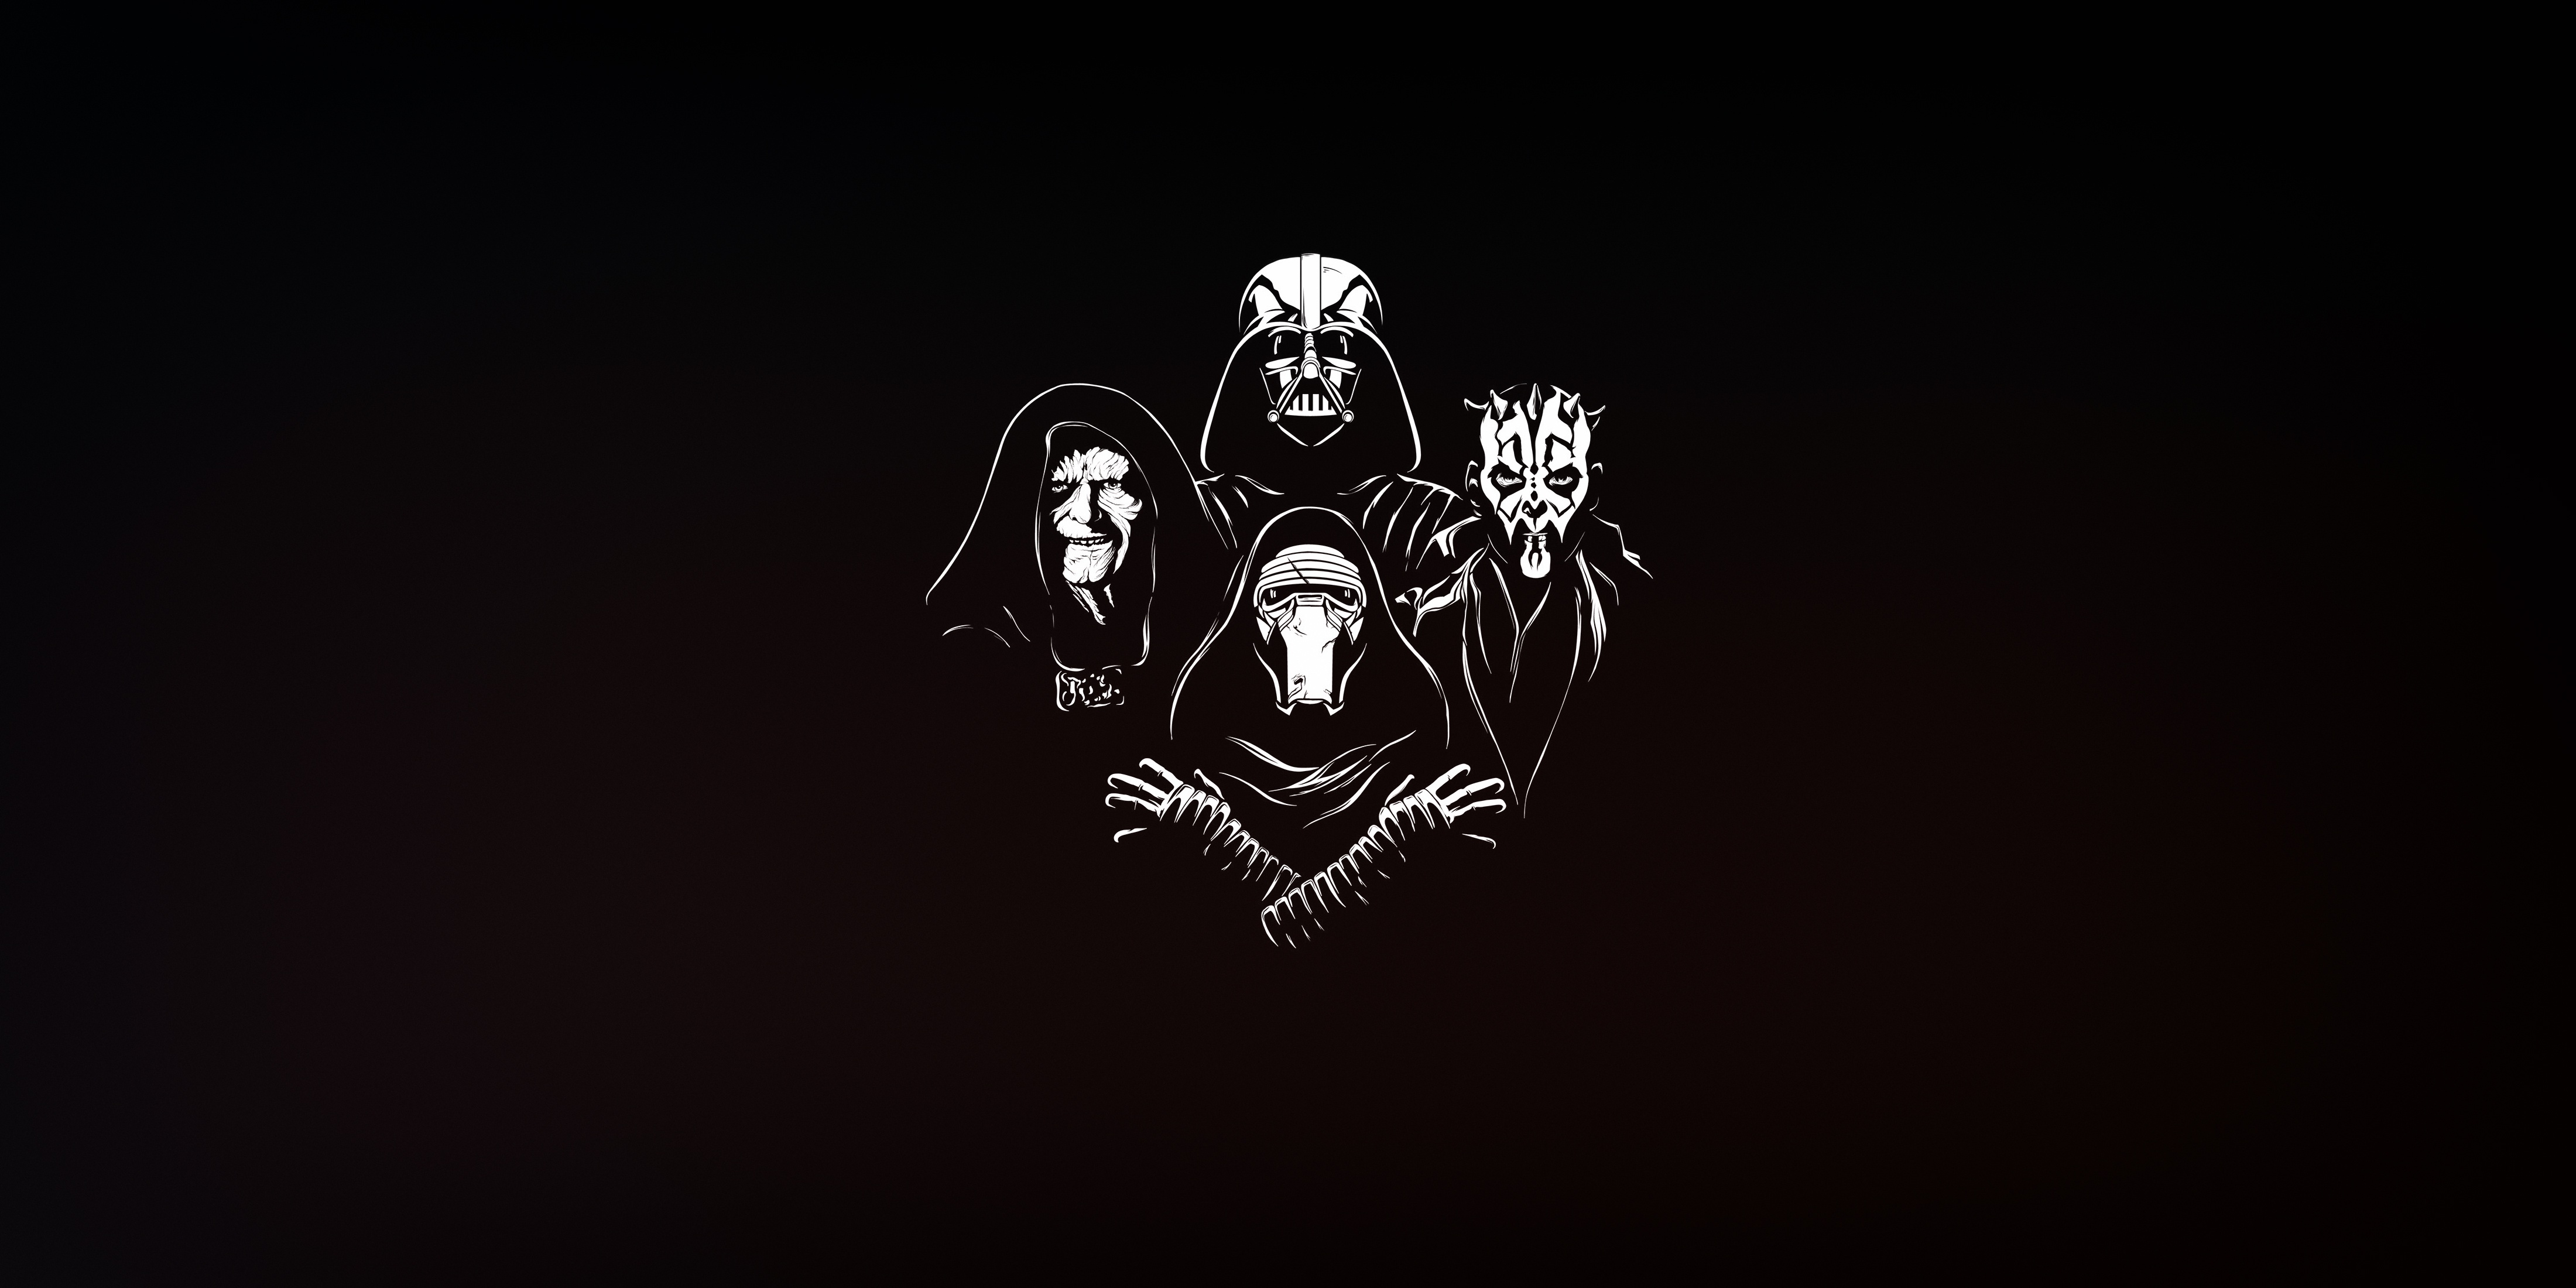 Minimalism Sith Star Wars Artwork Simple Background Darth Maul Emperor Palpatine Darth Vader Kylo Re 4400x2200